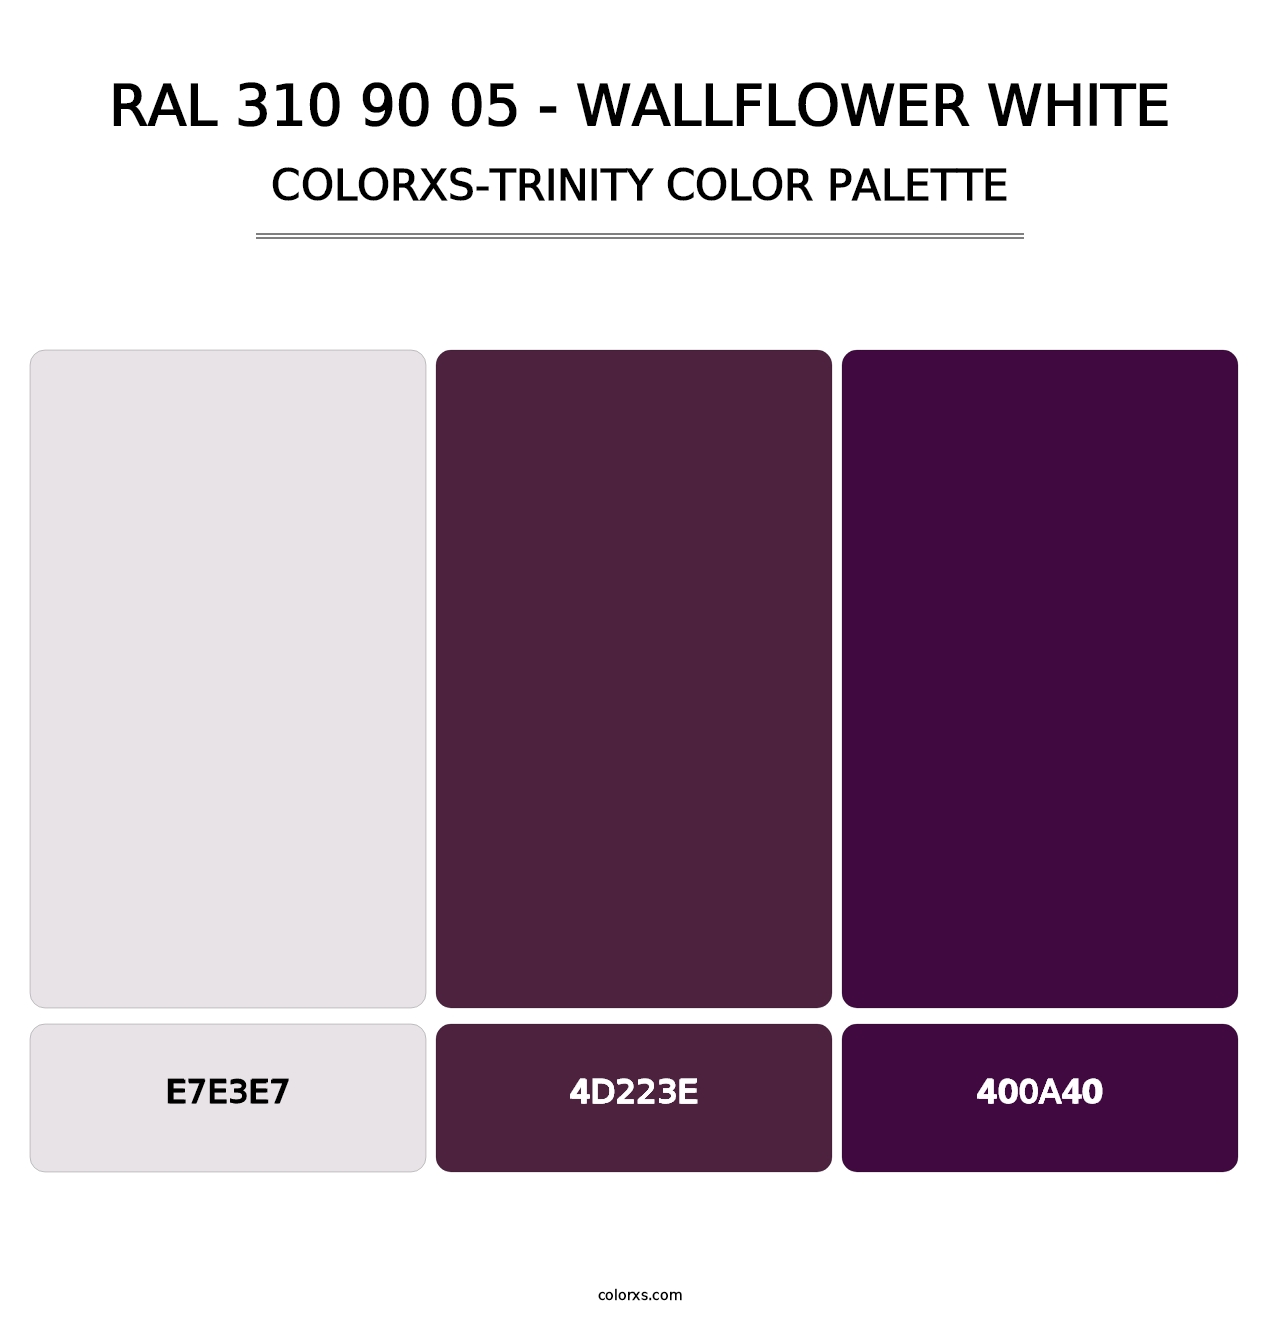 RAL 310 90 05 - Wallflower White - Colorxs Trinity Palette